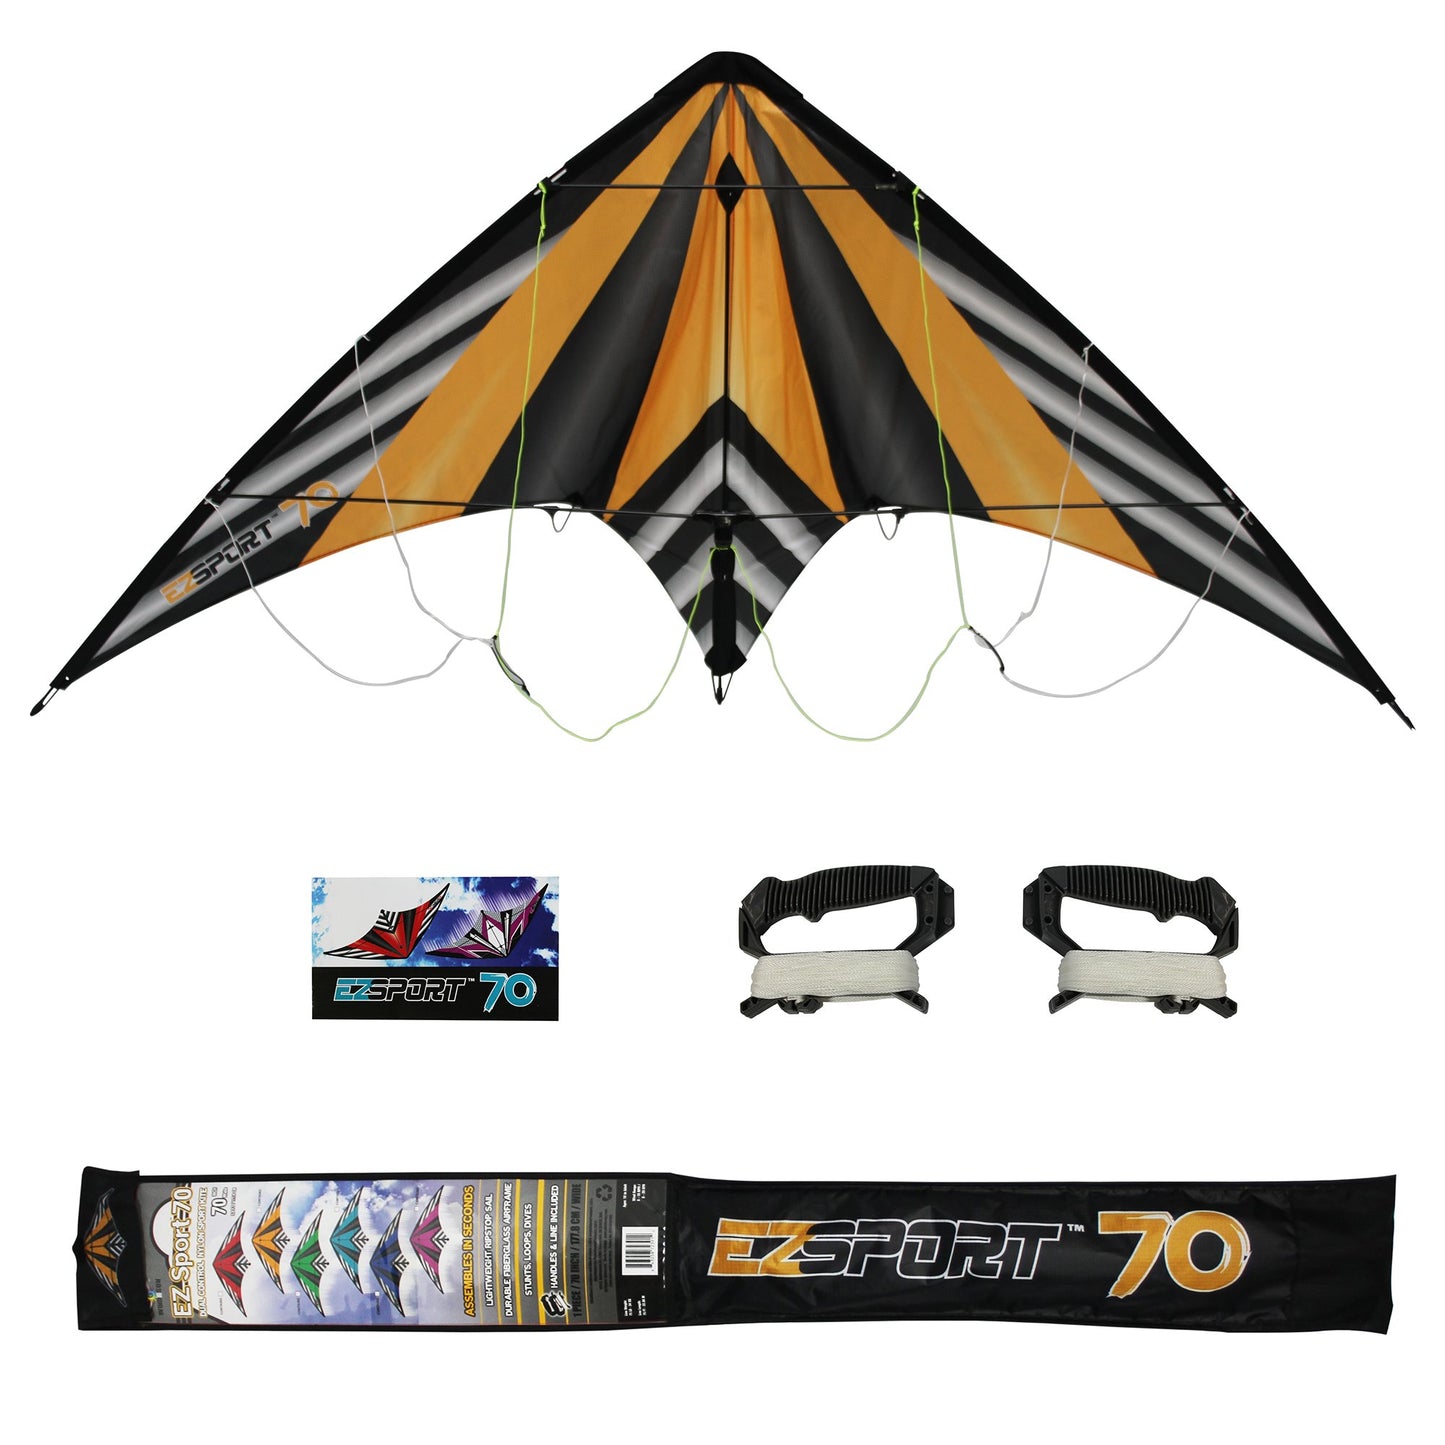 WindNSun EZ Sport 70 Dual Control Sport Kite Yellow Stripe Nylon Kite photo showing handle